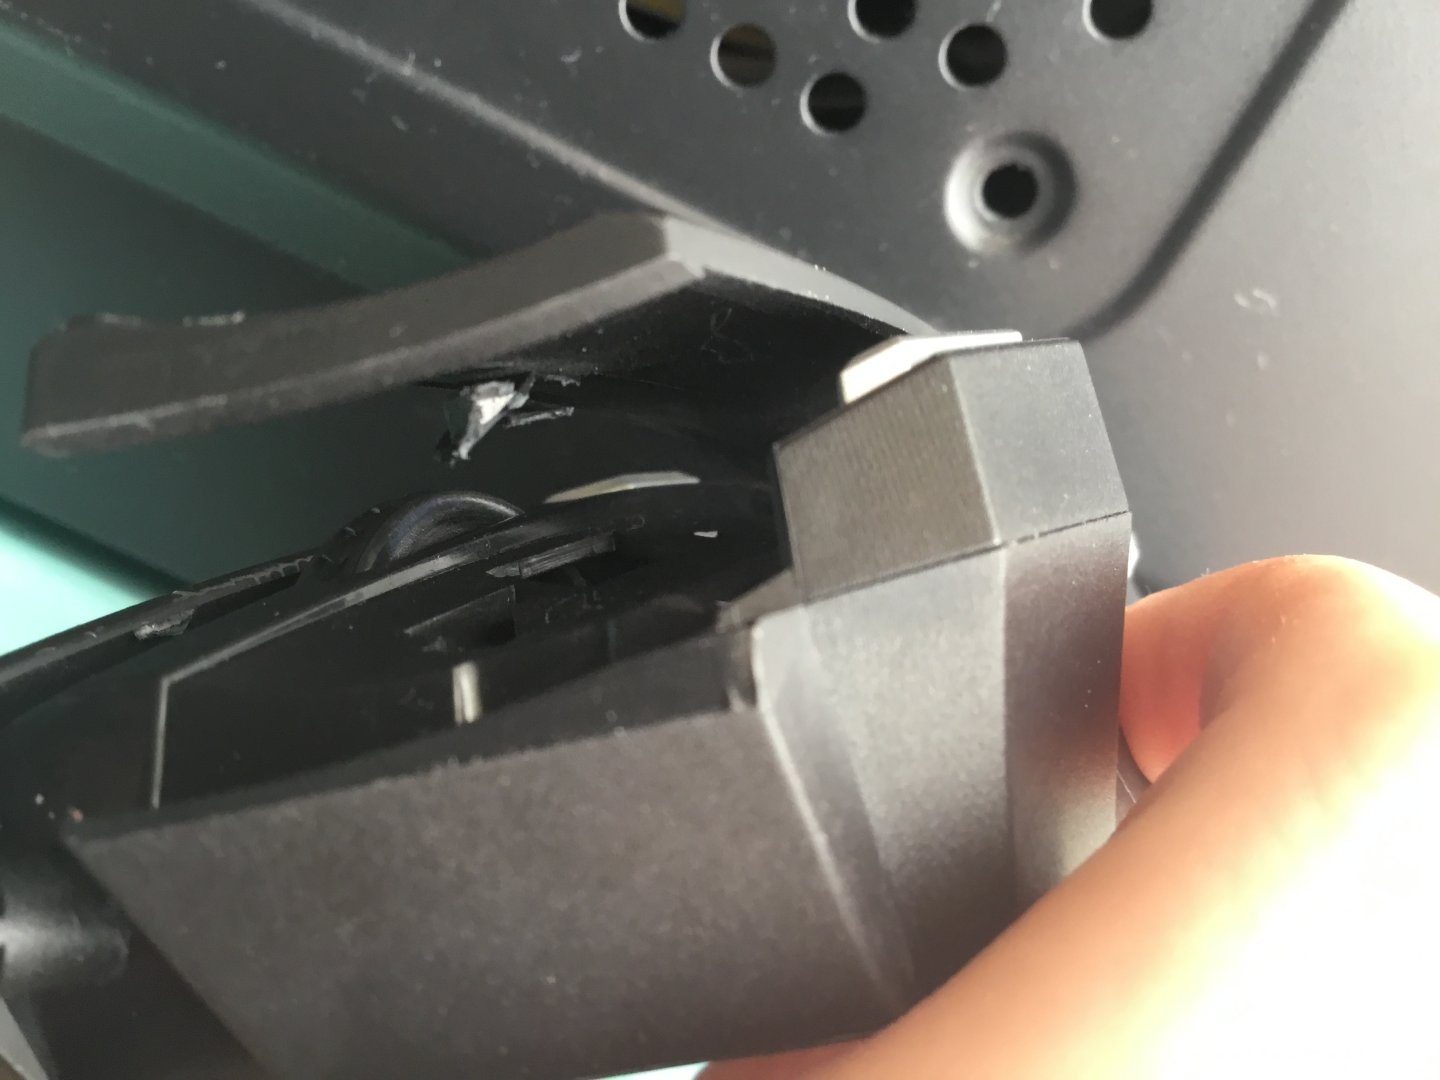 Piranha X7 Gaming mouse tamir ettirilir mi? | Technopat Sosyal